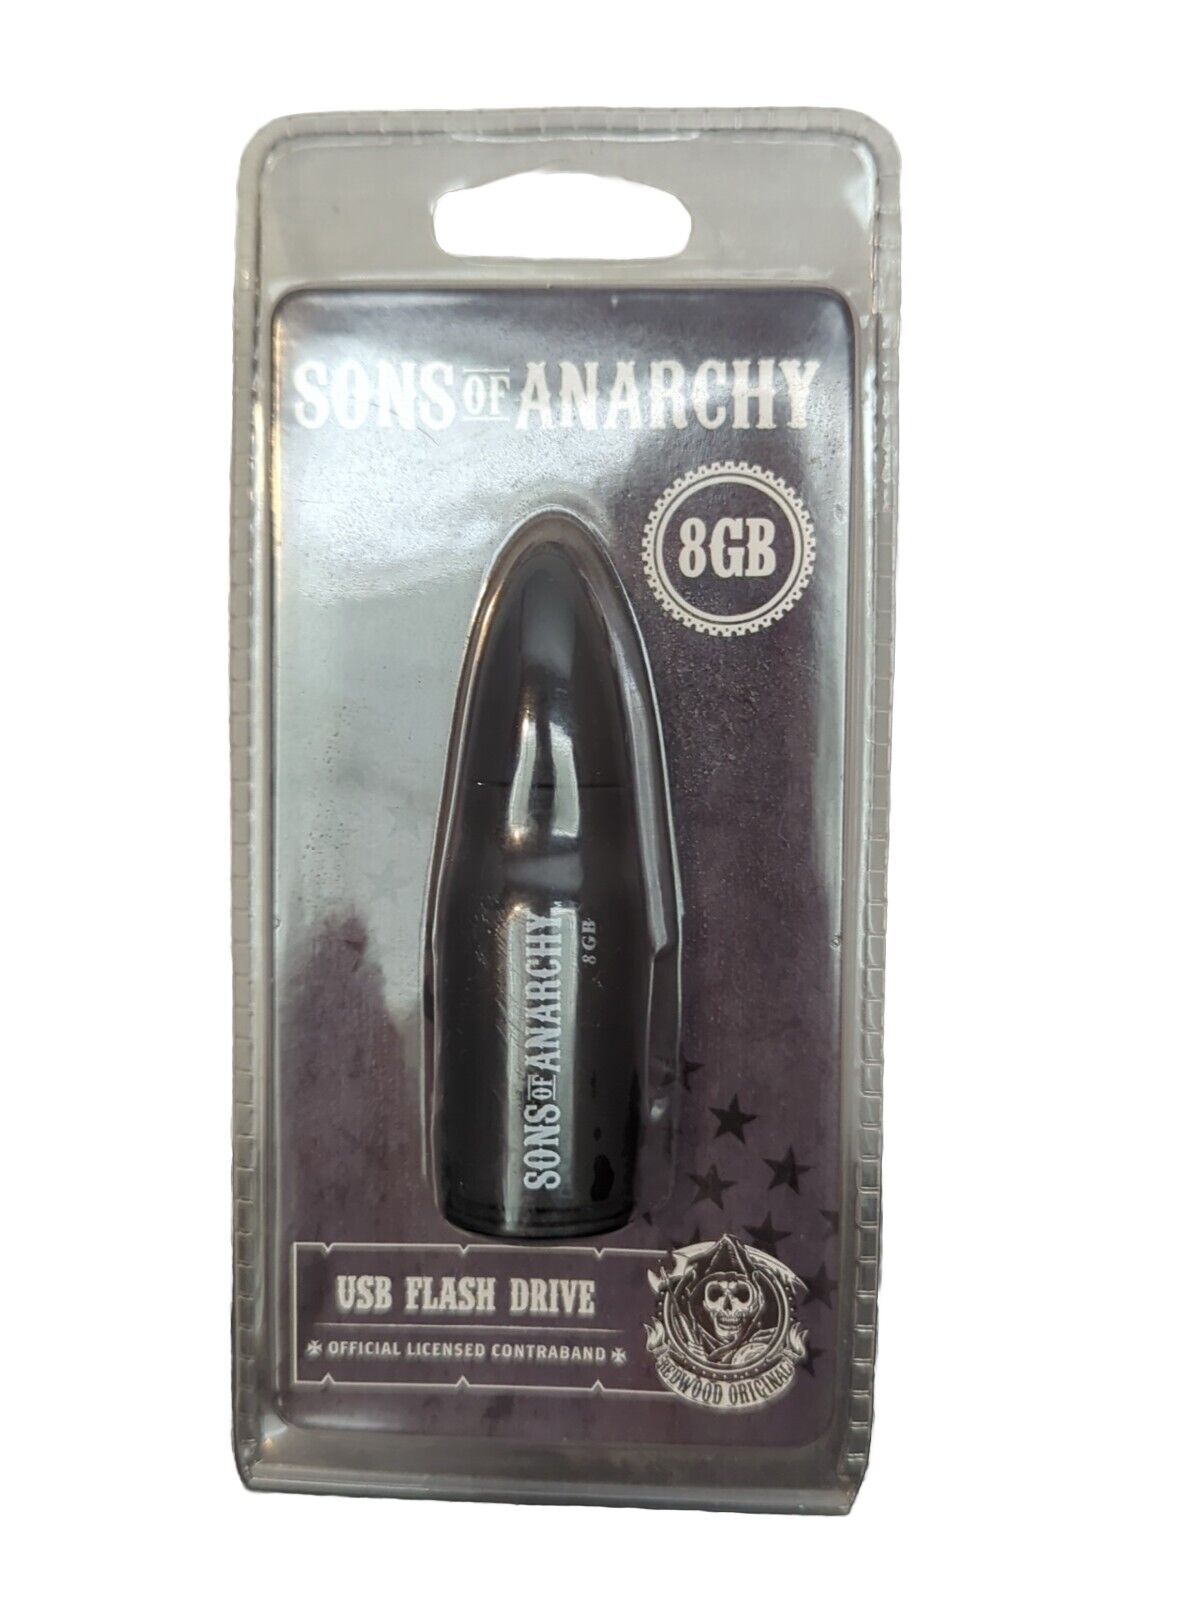 Sons Of Anarchy 8GB USB Flash Drive, Tribeca, 2012, Mac Or PC